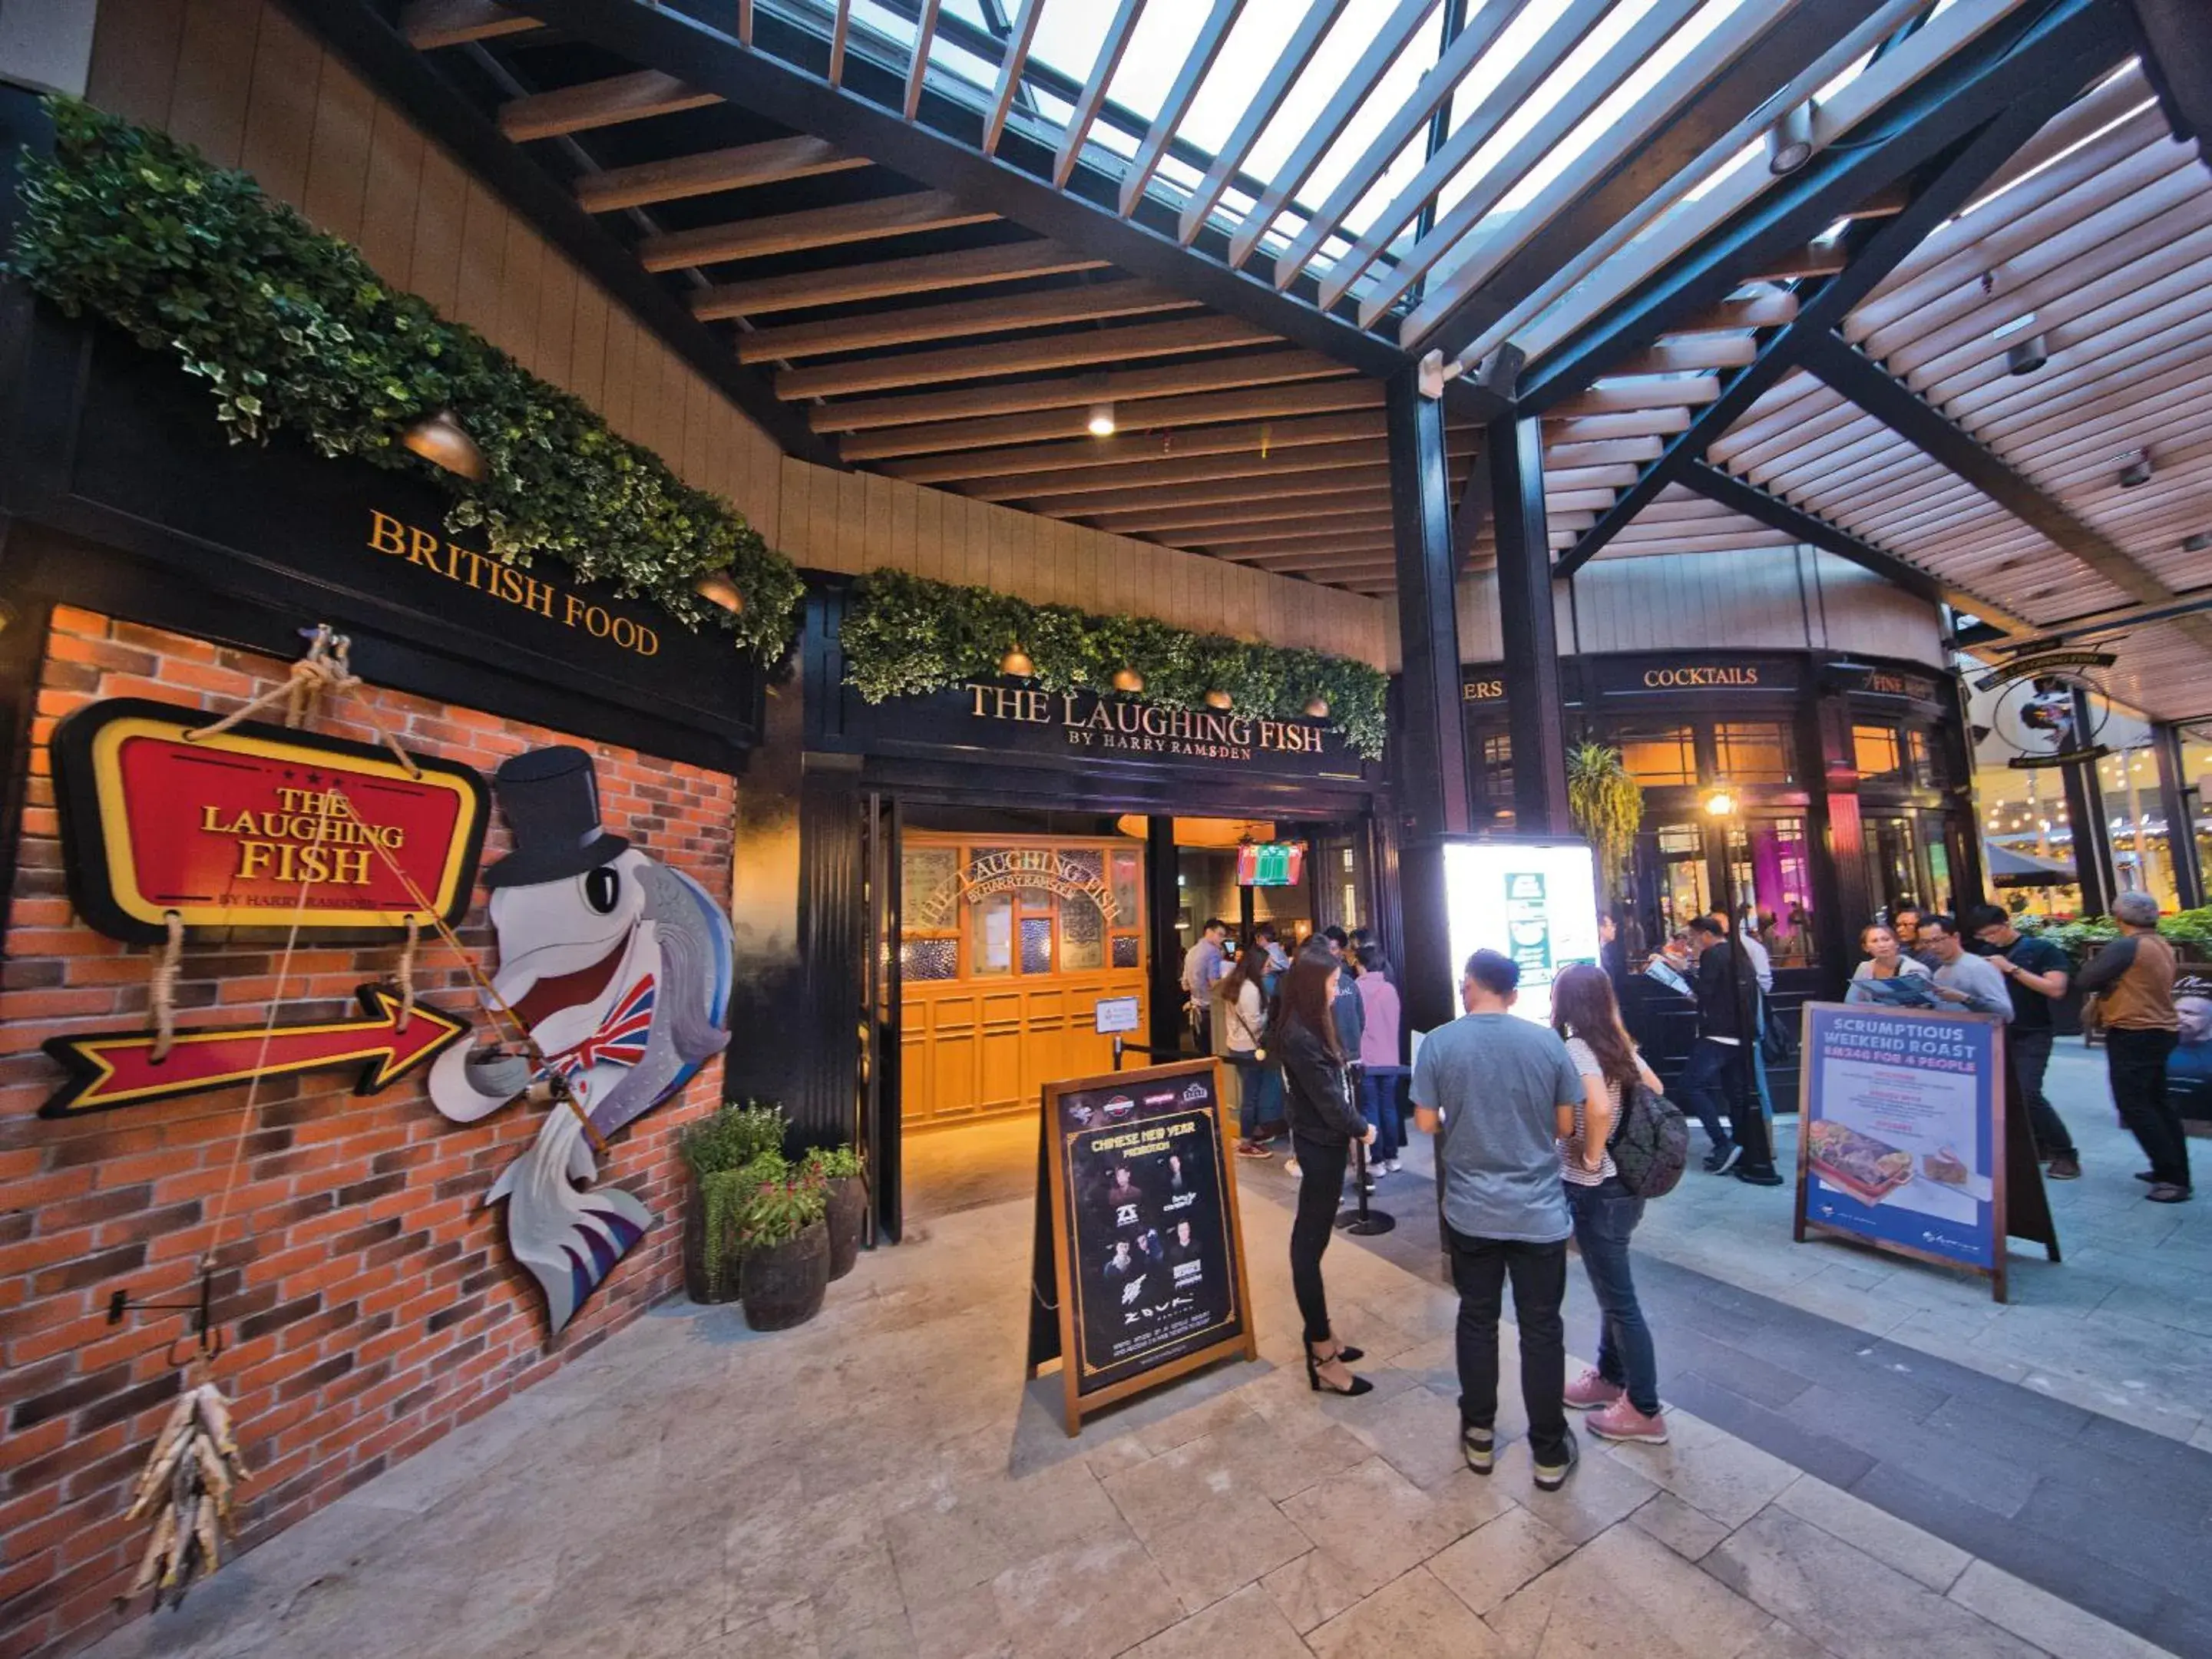 On-site shops in Resorts World Genting - Crockfords